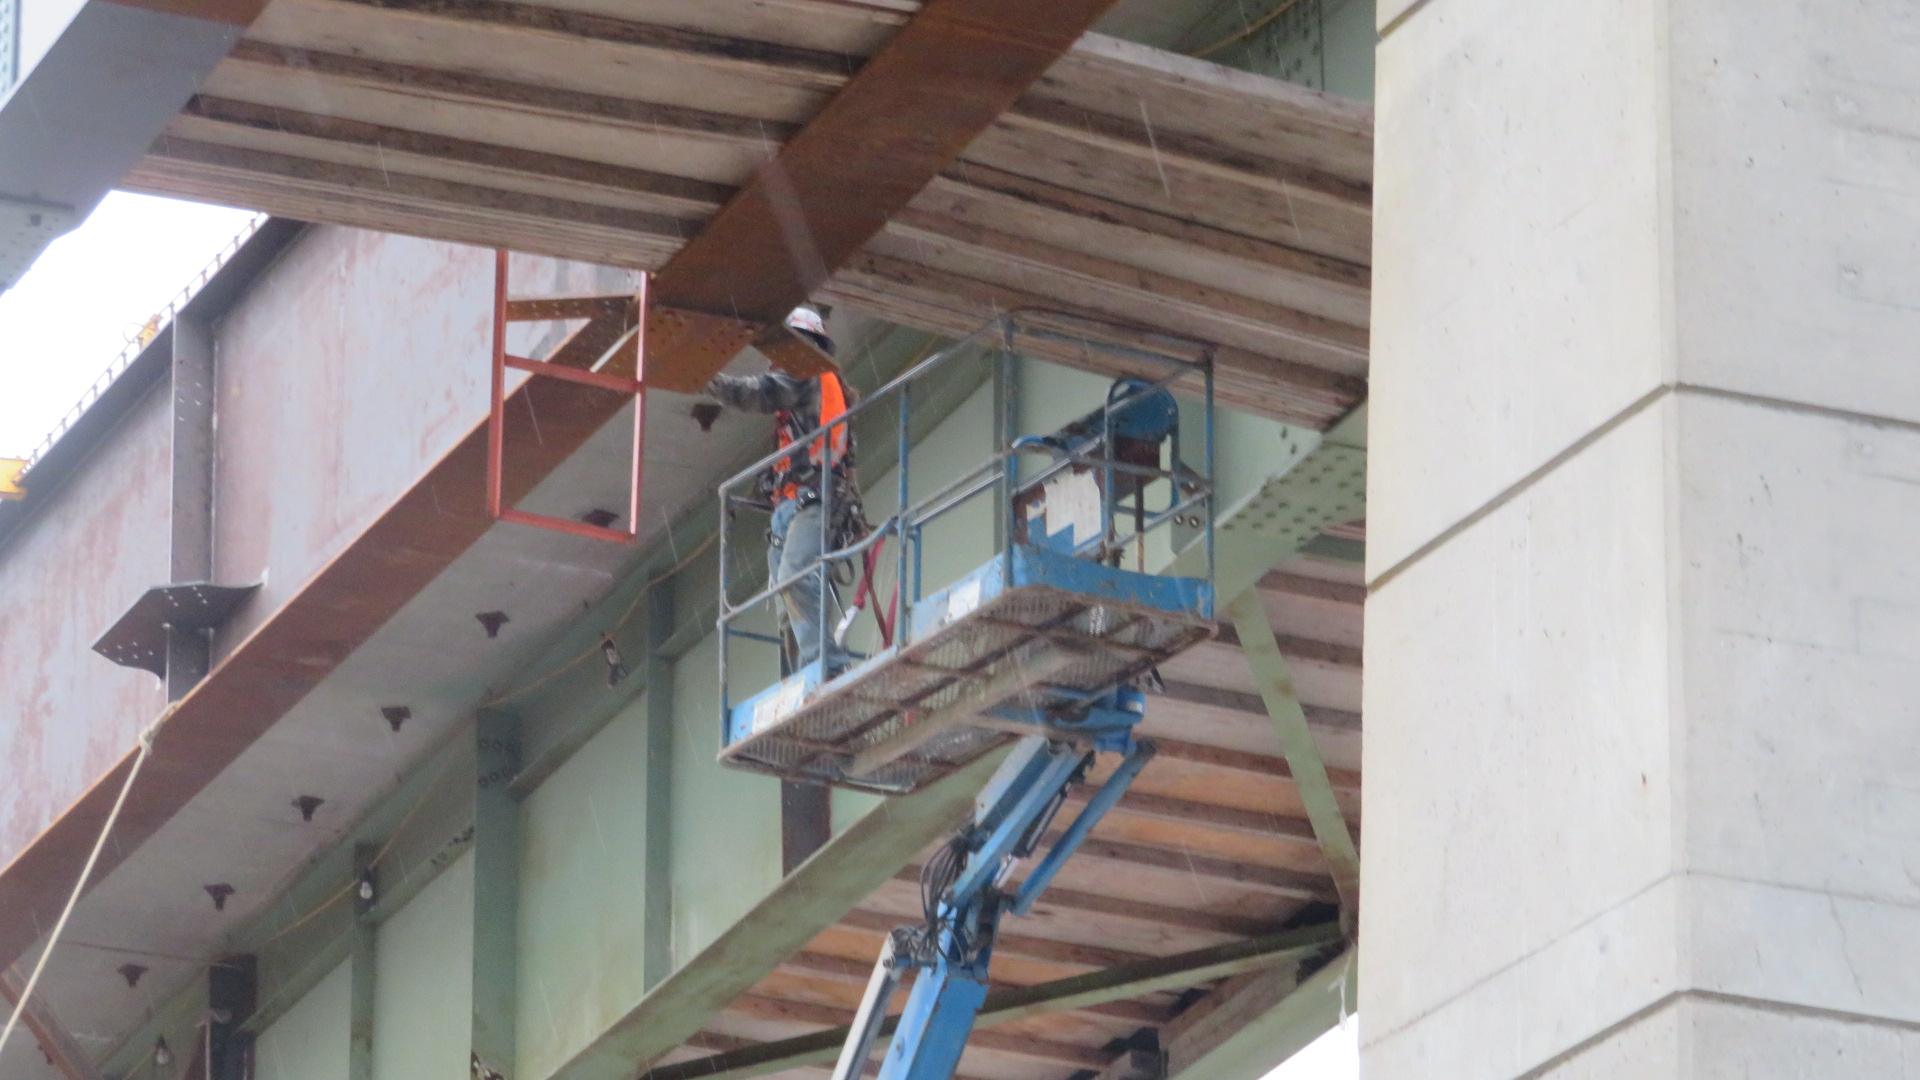 Positioning the girder for installation